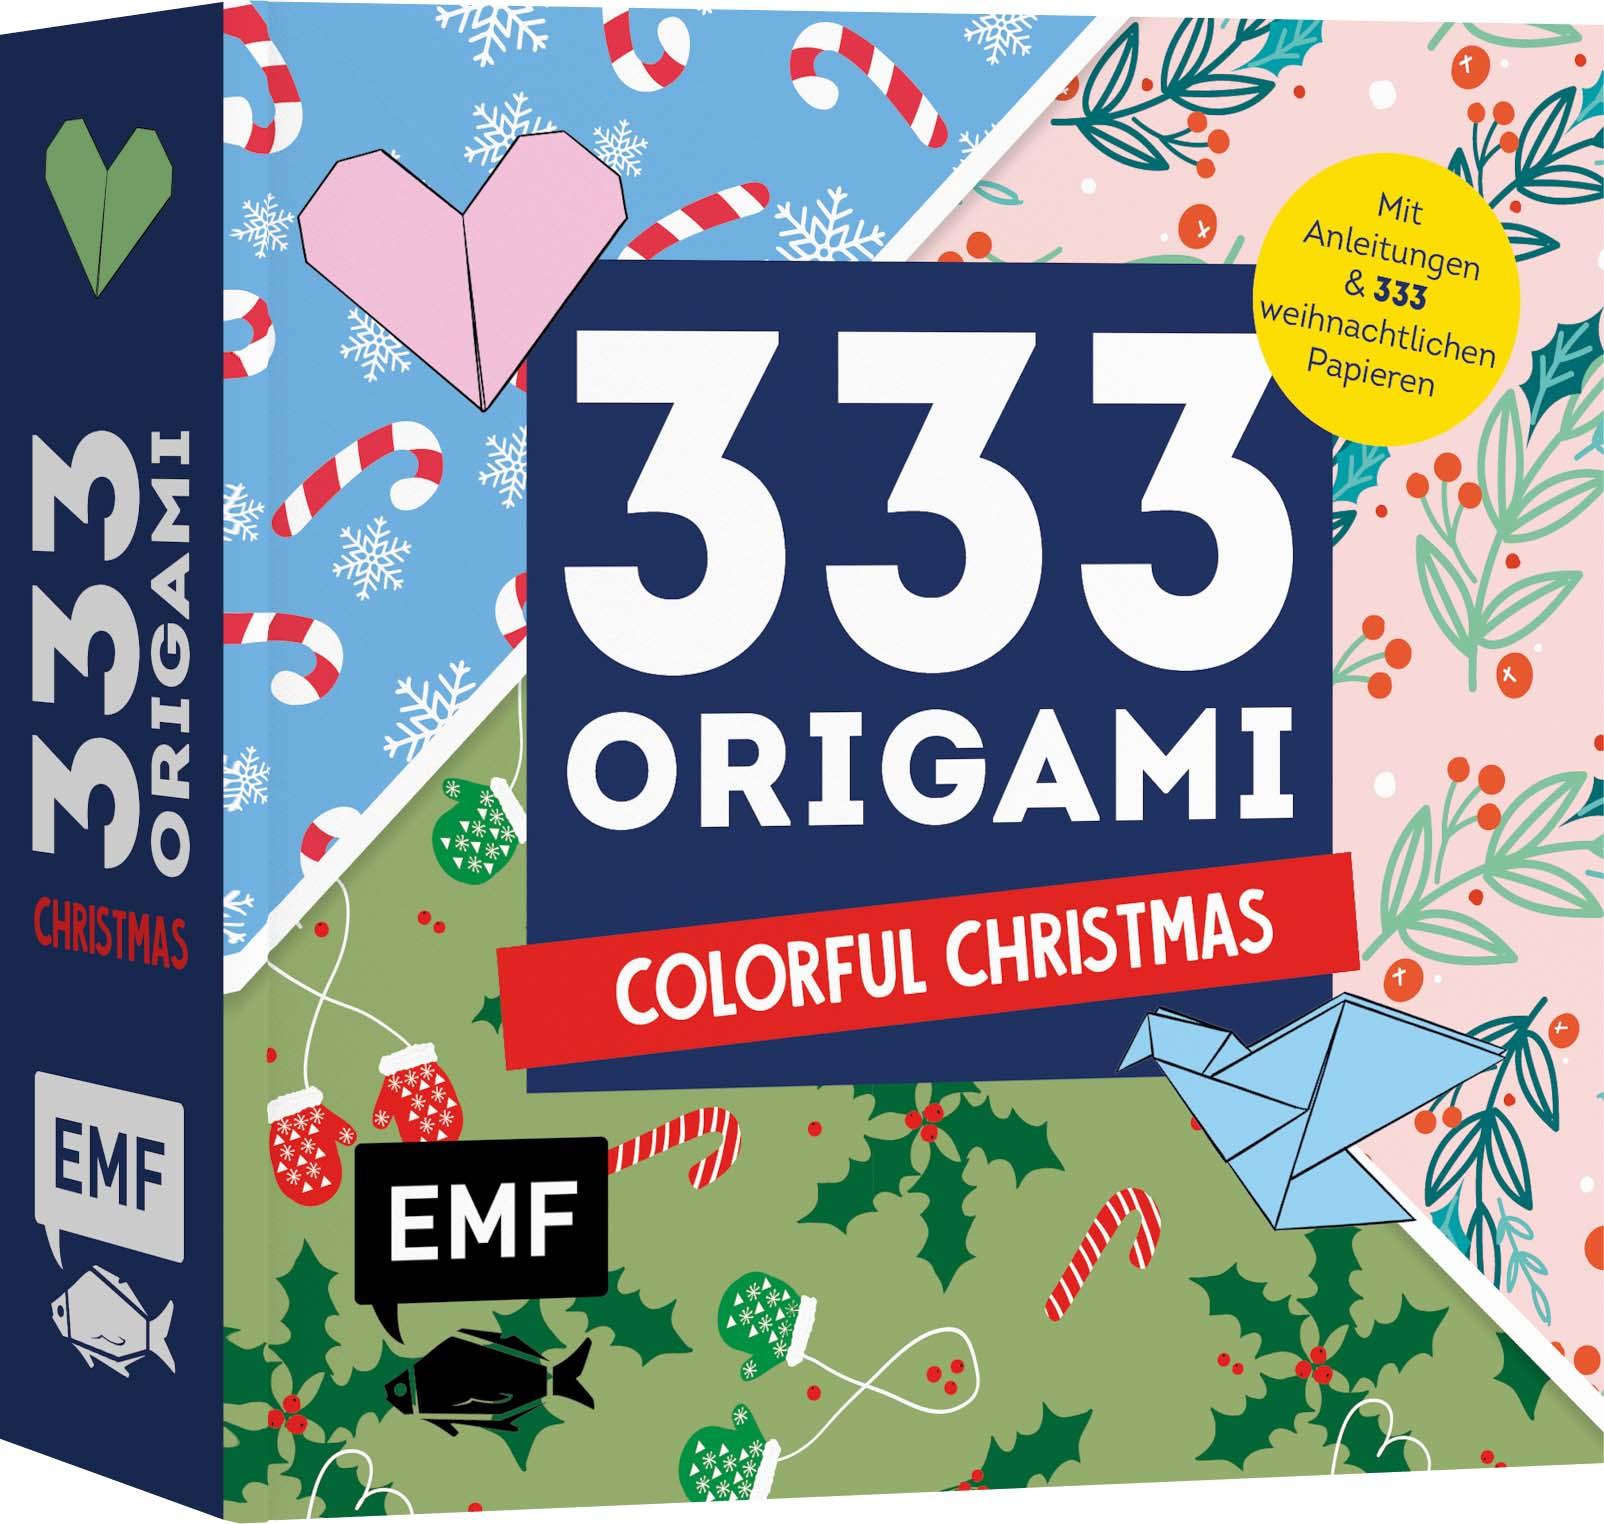 Knjiga 333 Origami - Colorful Christmas 